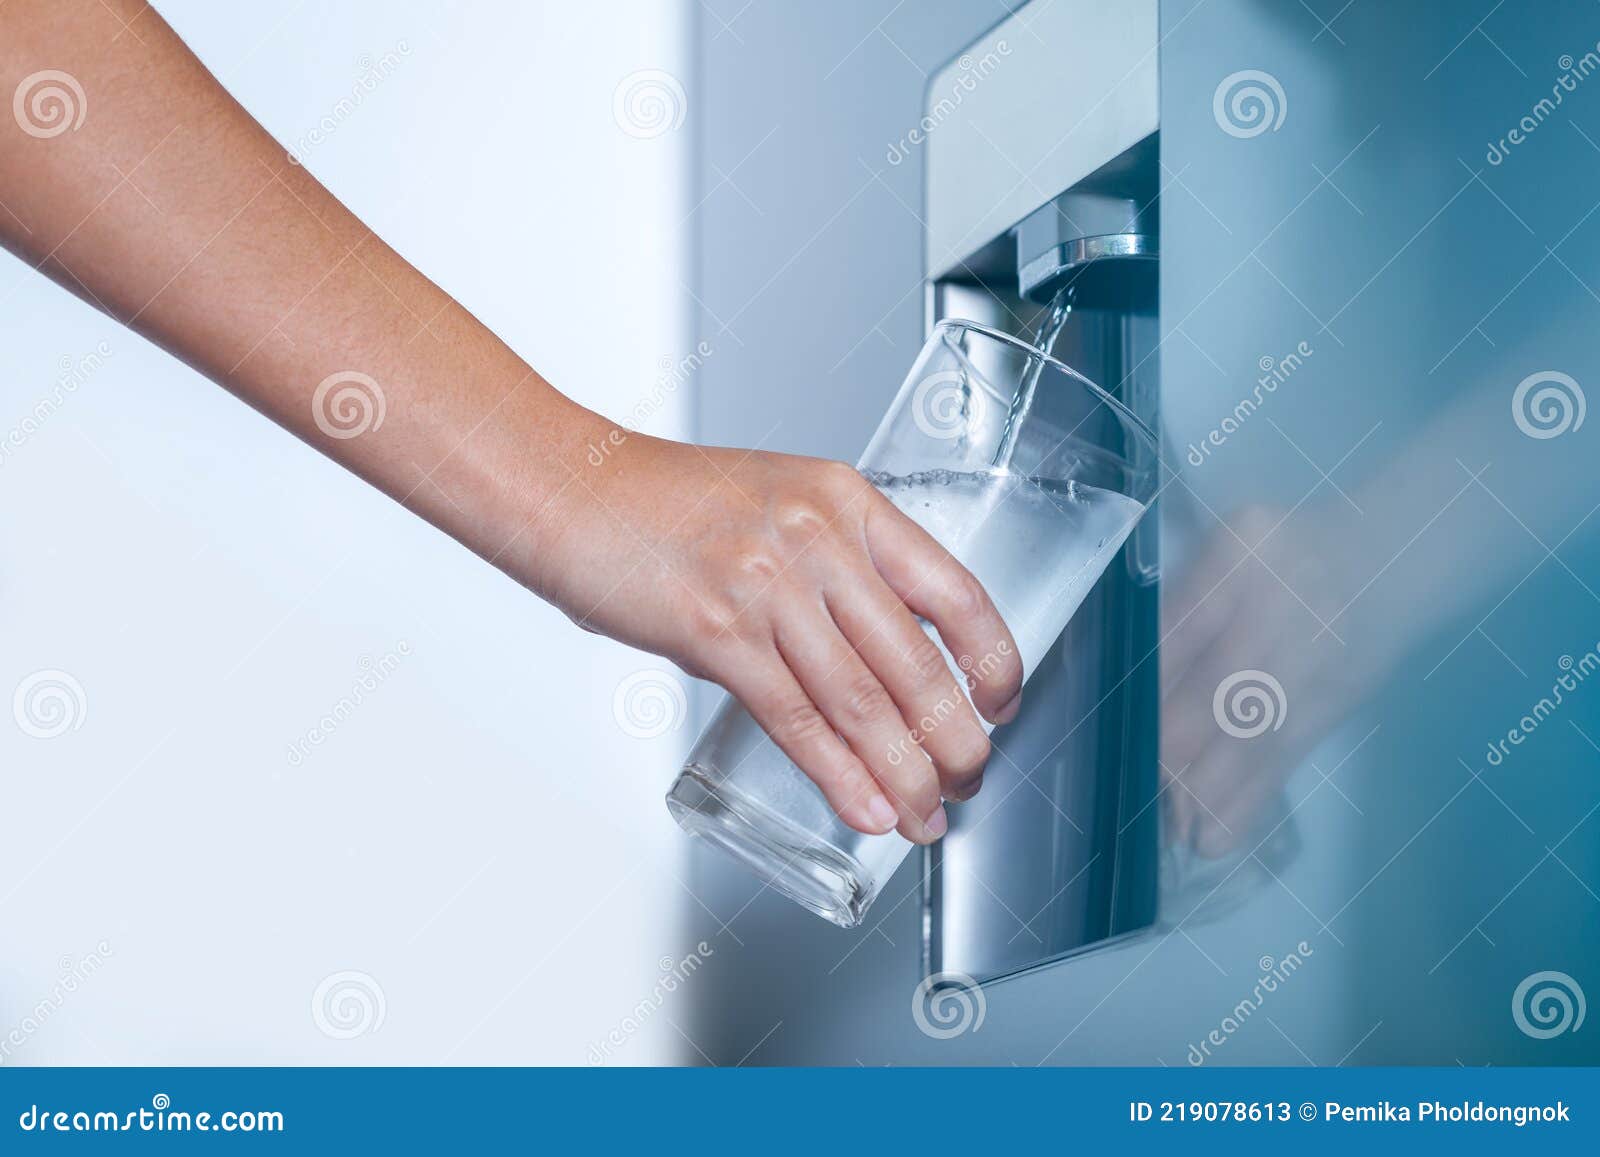 https://thumbs.dreamstime.com/z/water-dispenser-dispenser-home-fridge-woman-filling-glass-water-refrigerator-water-dispenser-219078613.jpg